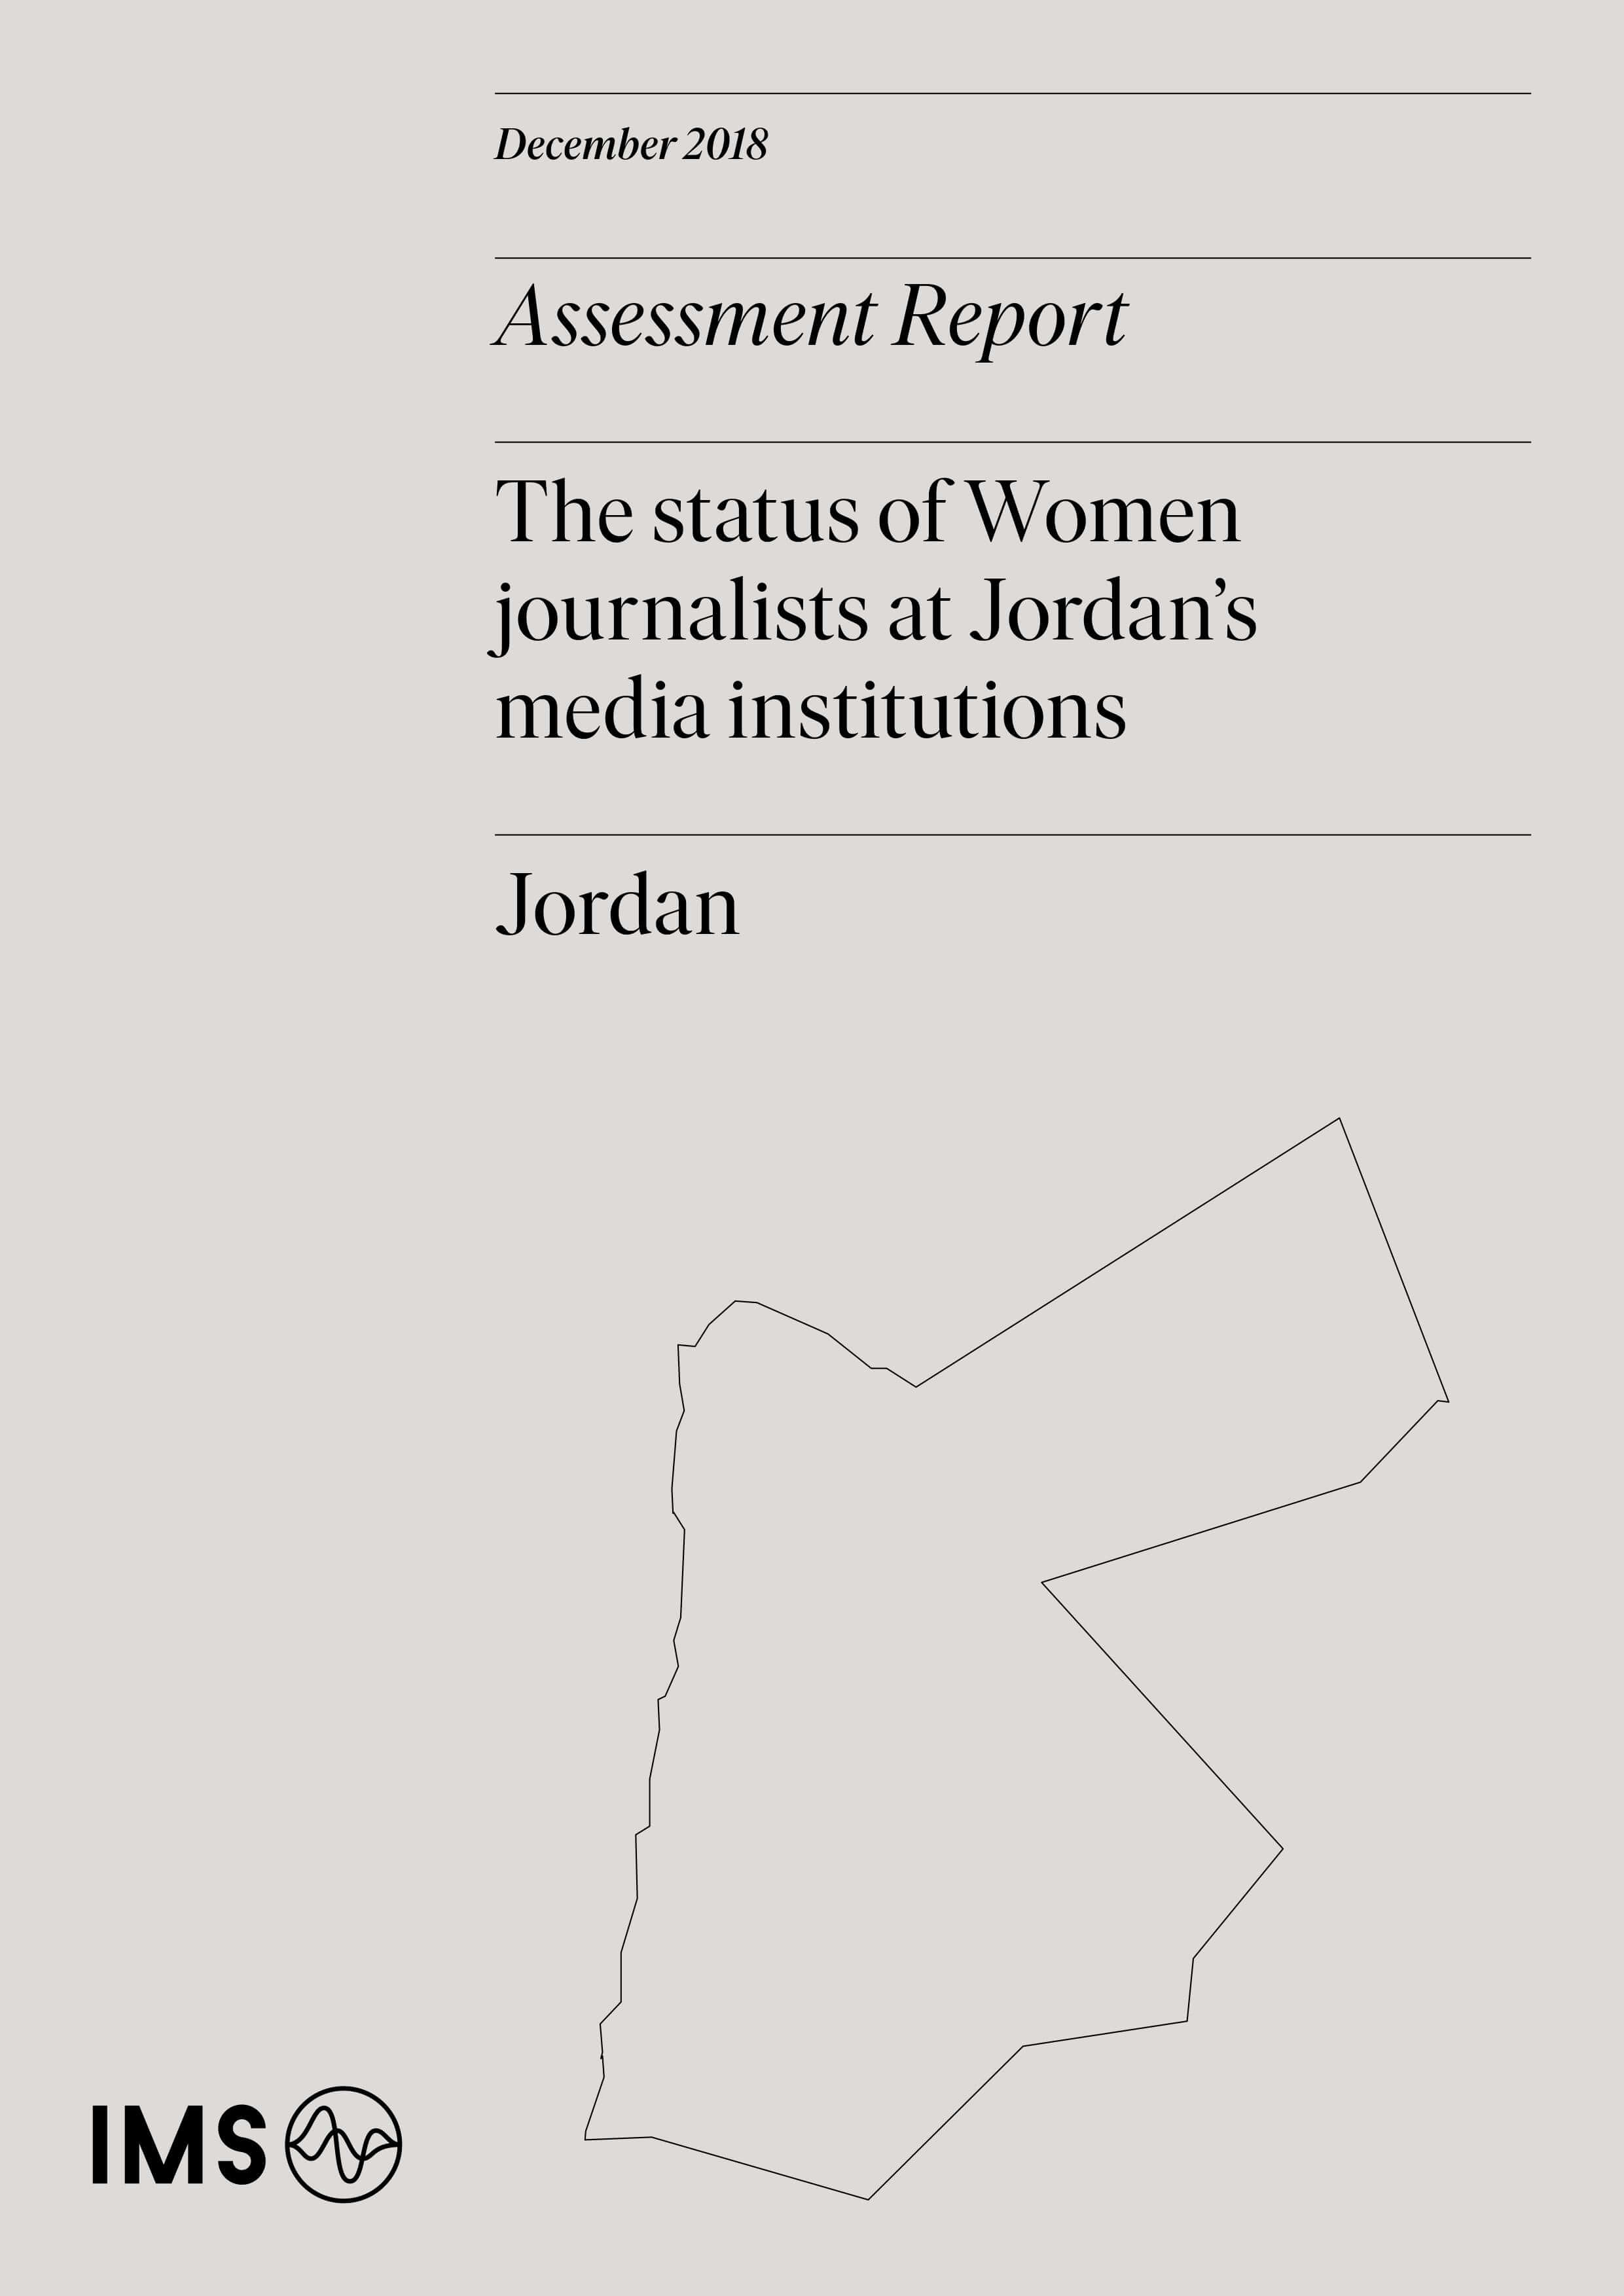 The status of women journalists in Jordan's media institutions